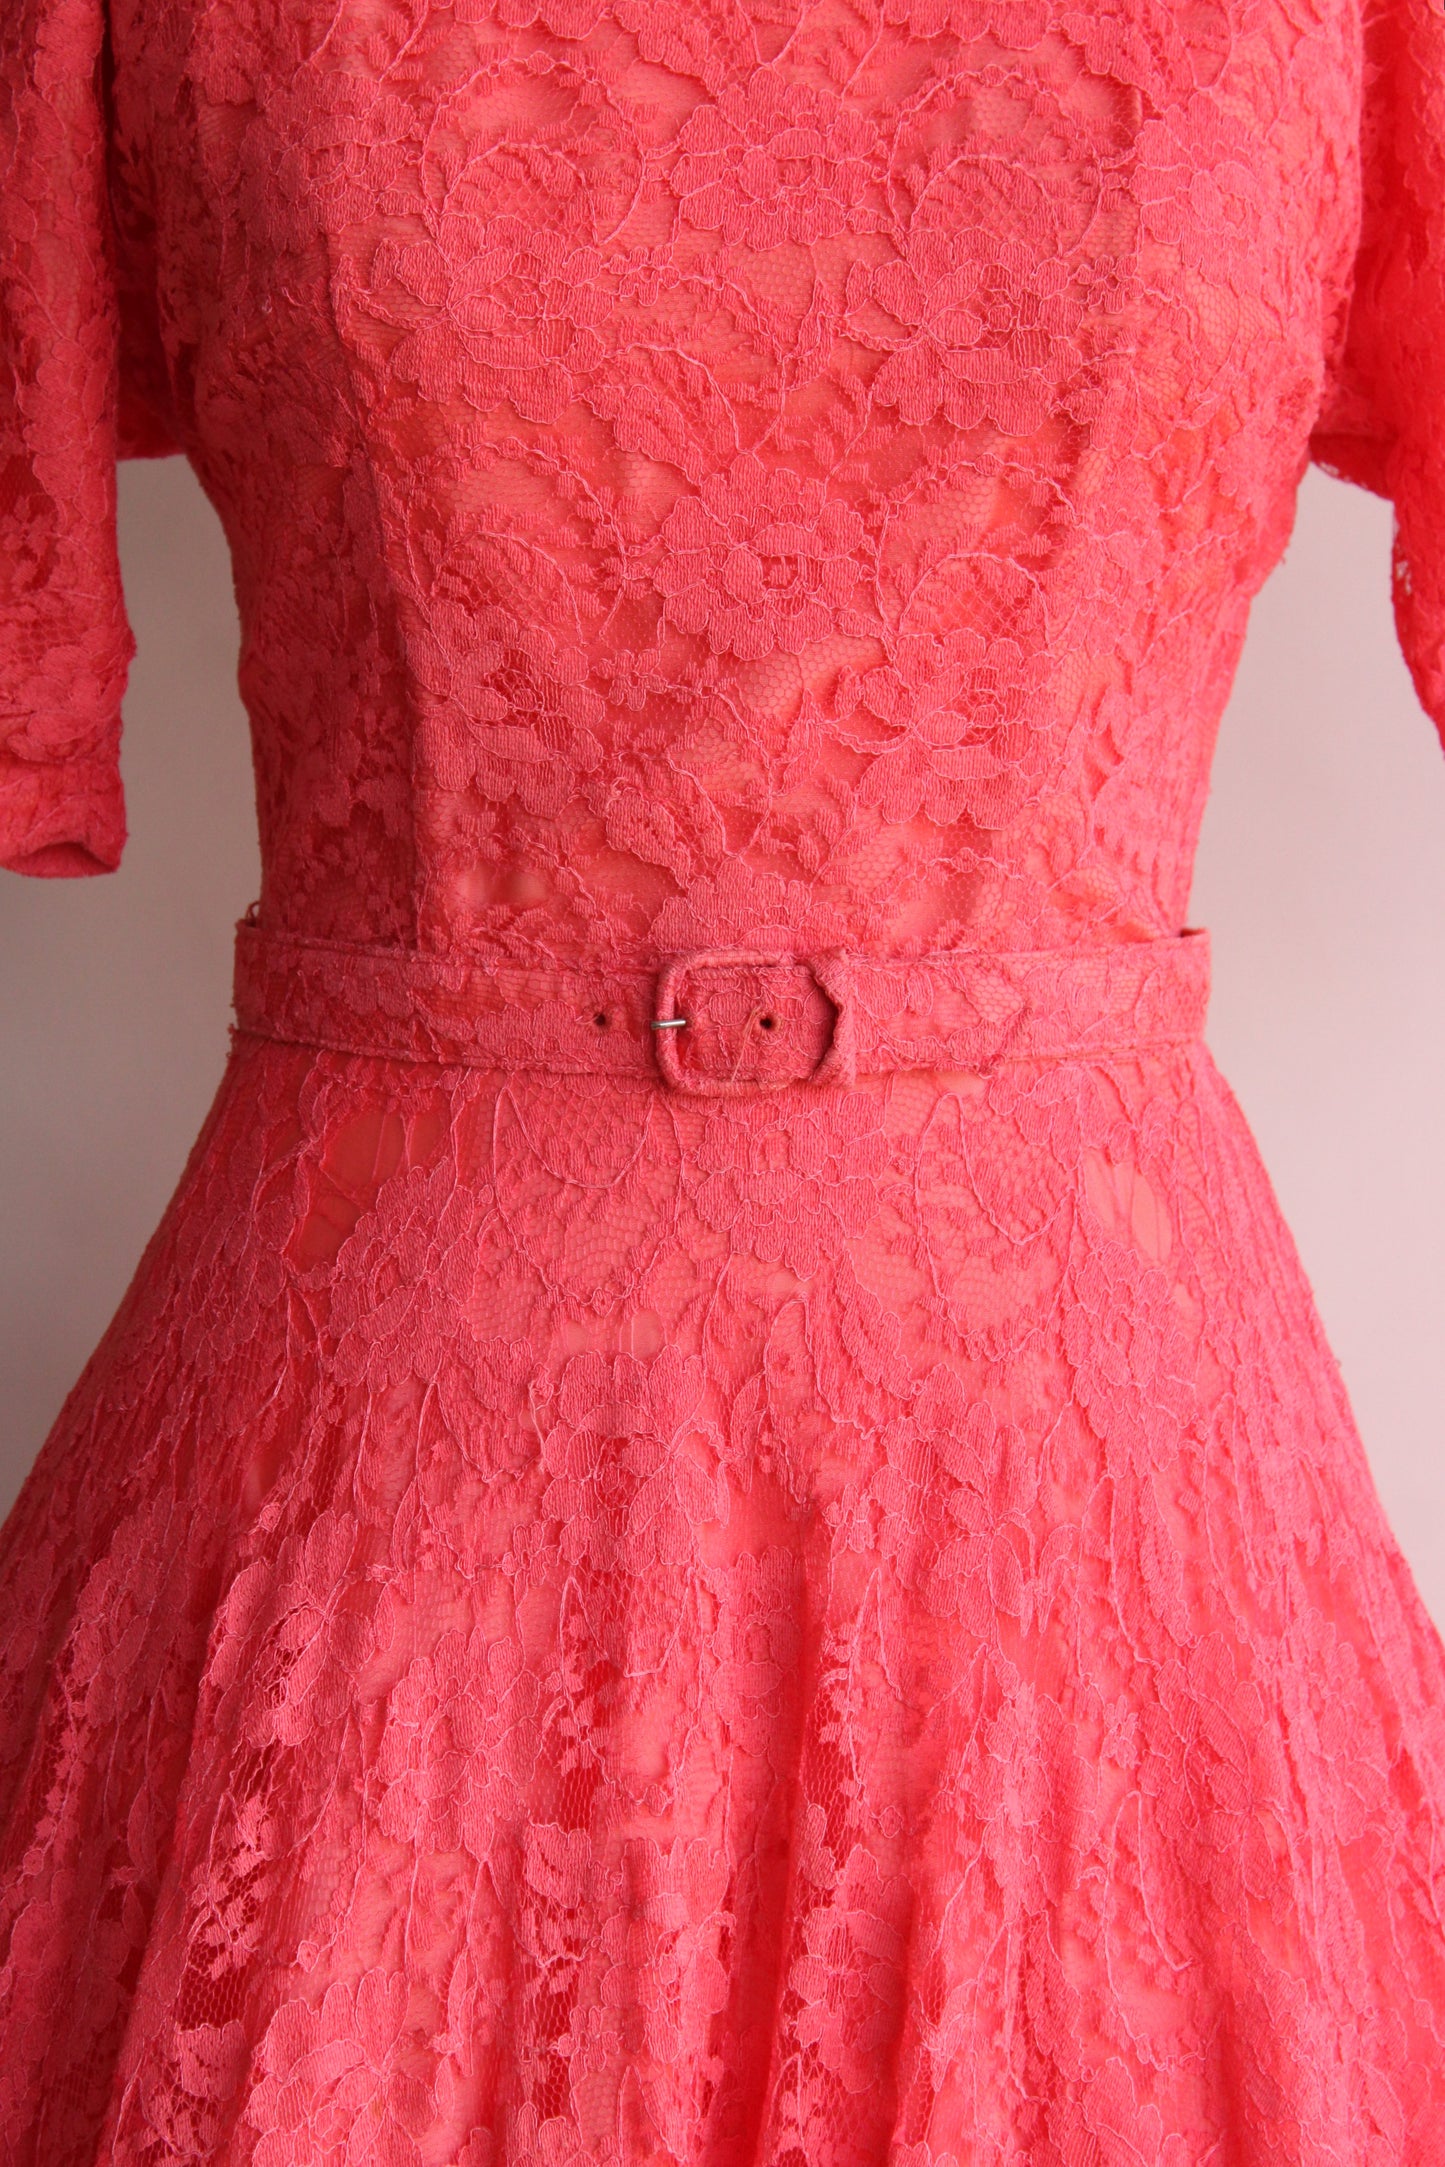 Vintage 1940s 1950s Pink Lace Dress With Belt by Jack Kopp